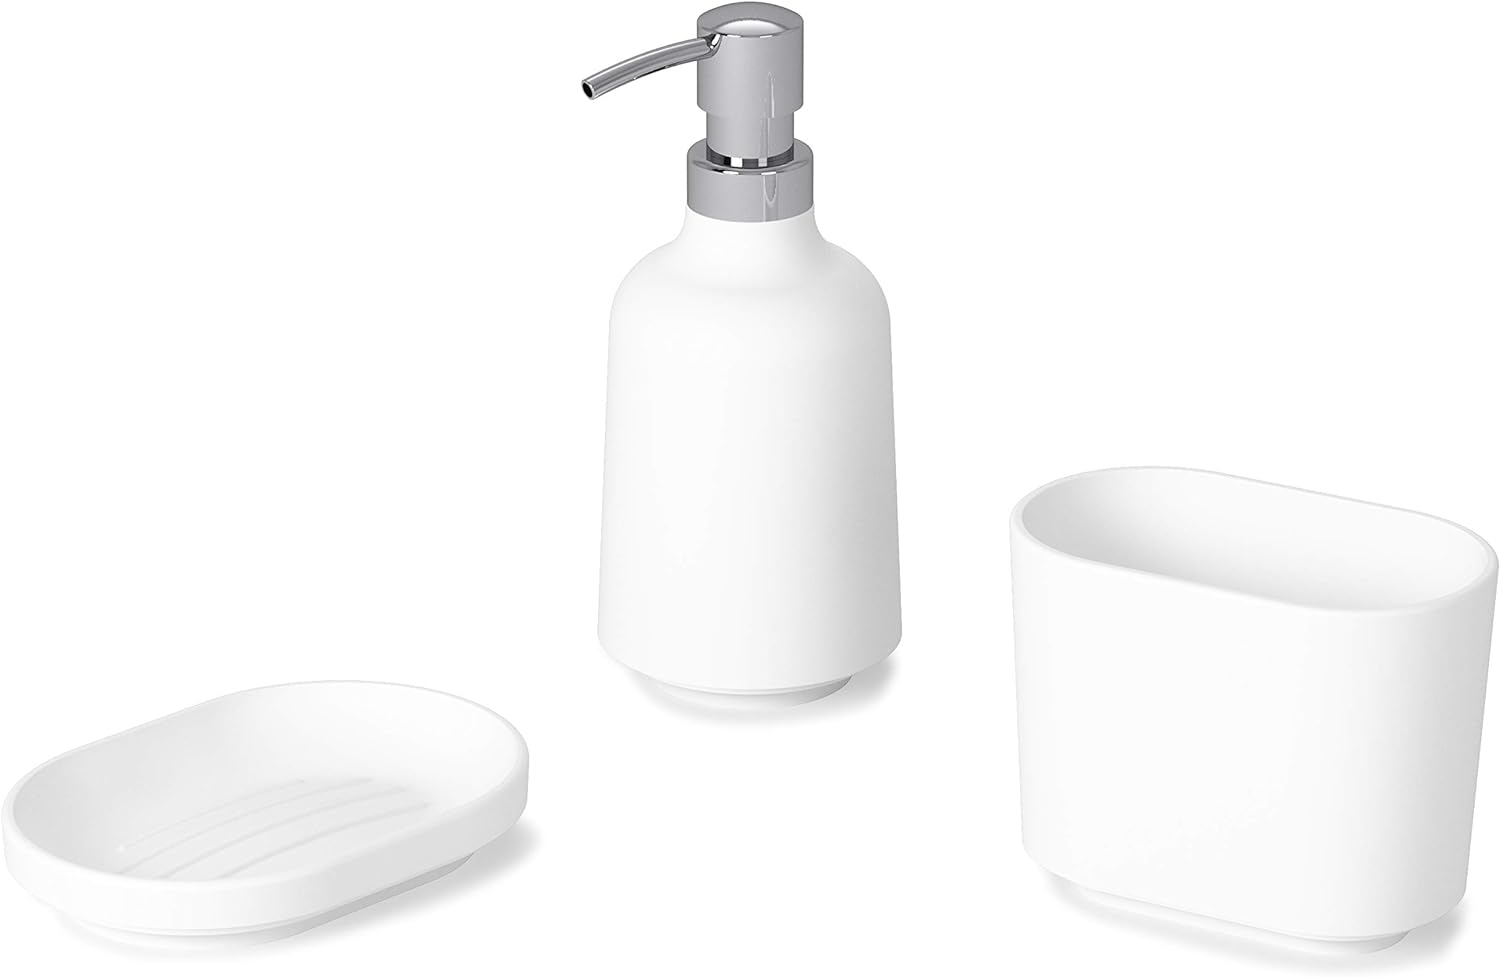 Umbra Melamine Oval Soap Dish for Bathroom and Kitchen